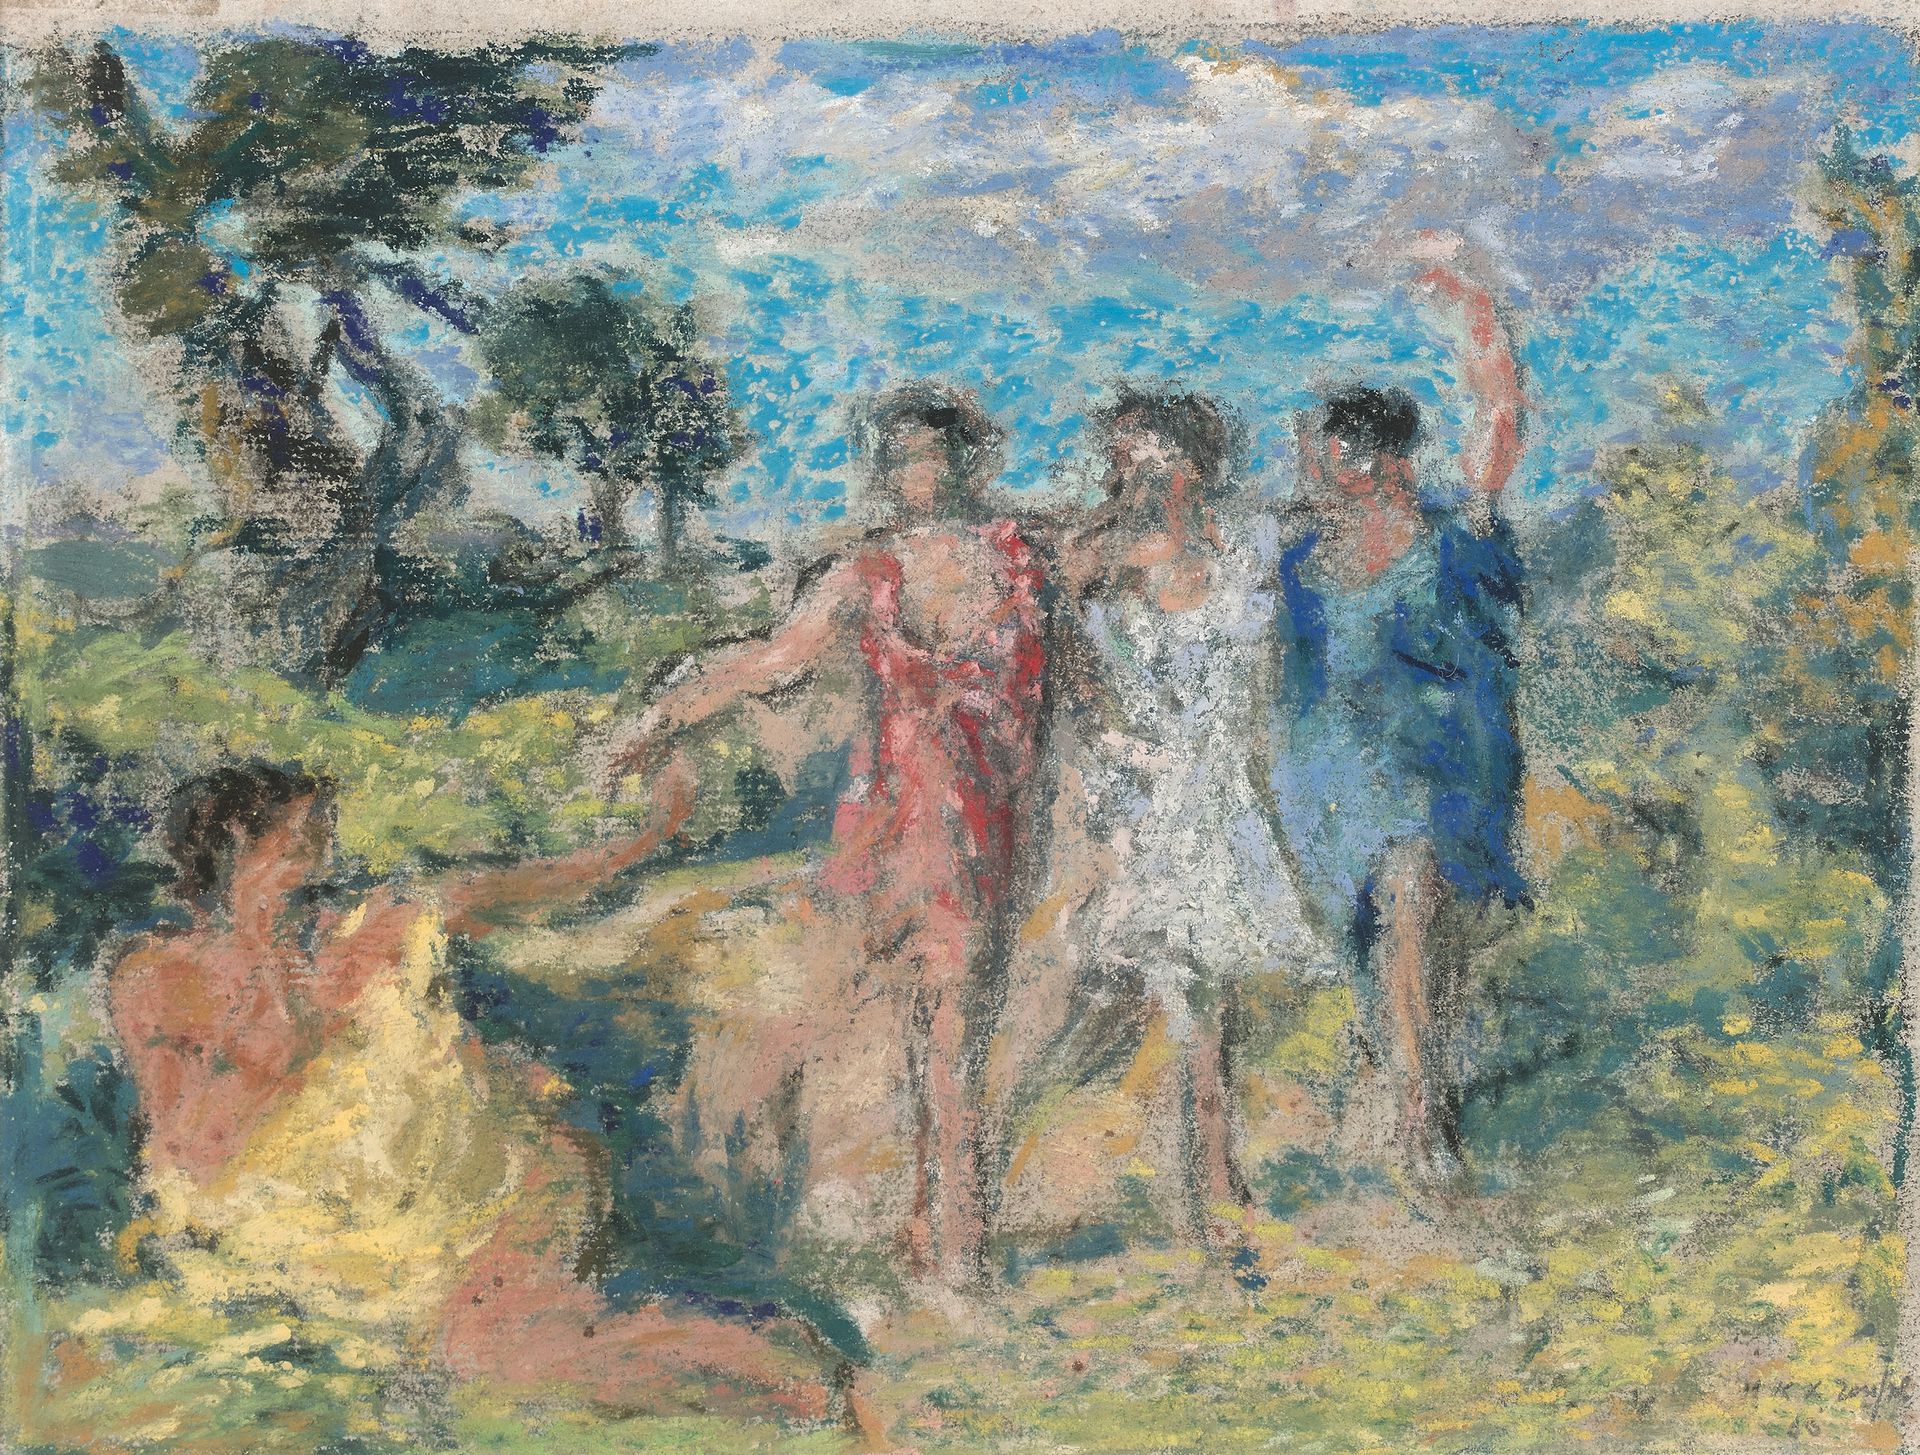 Ker Xavier ROUSSEL (1867-1944) 舞蹈，1940年
纸上粉彩，右下方有签名和日期40。
14.5 x 19厘米。